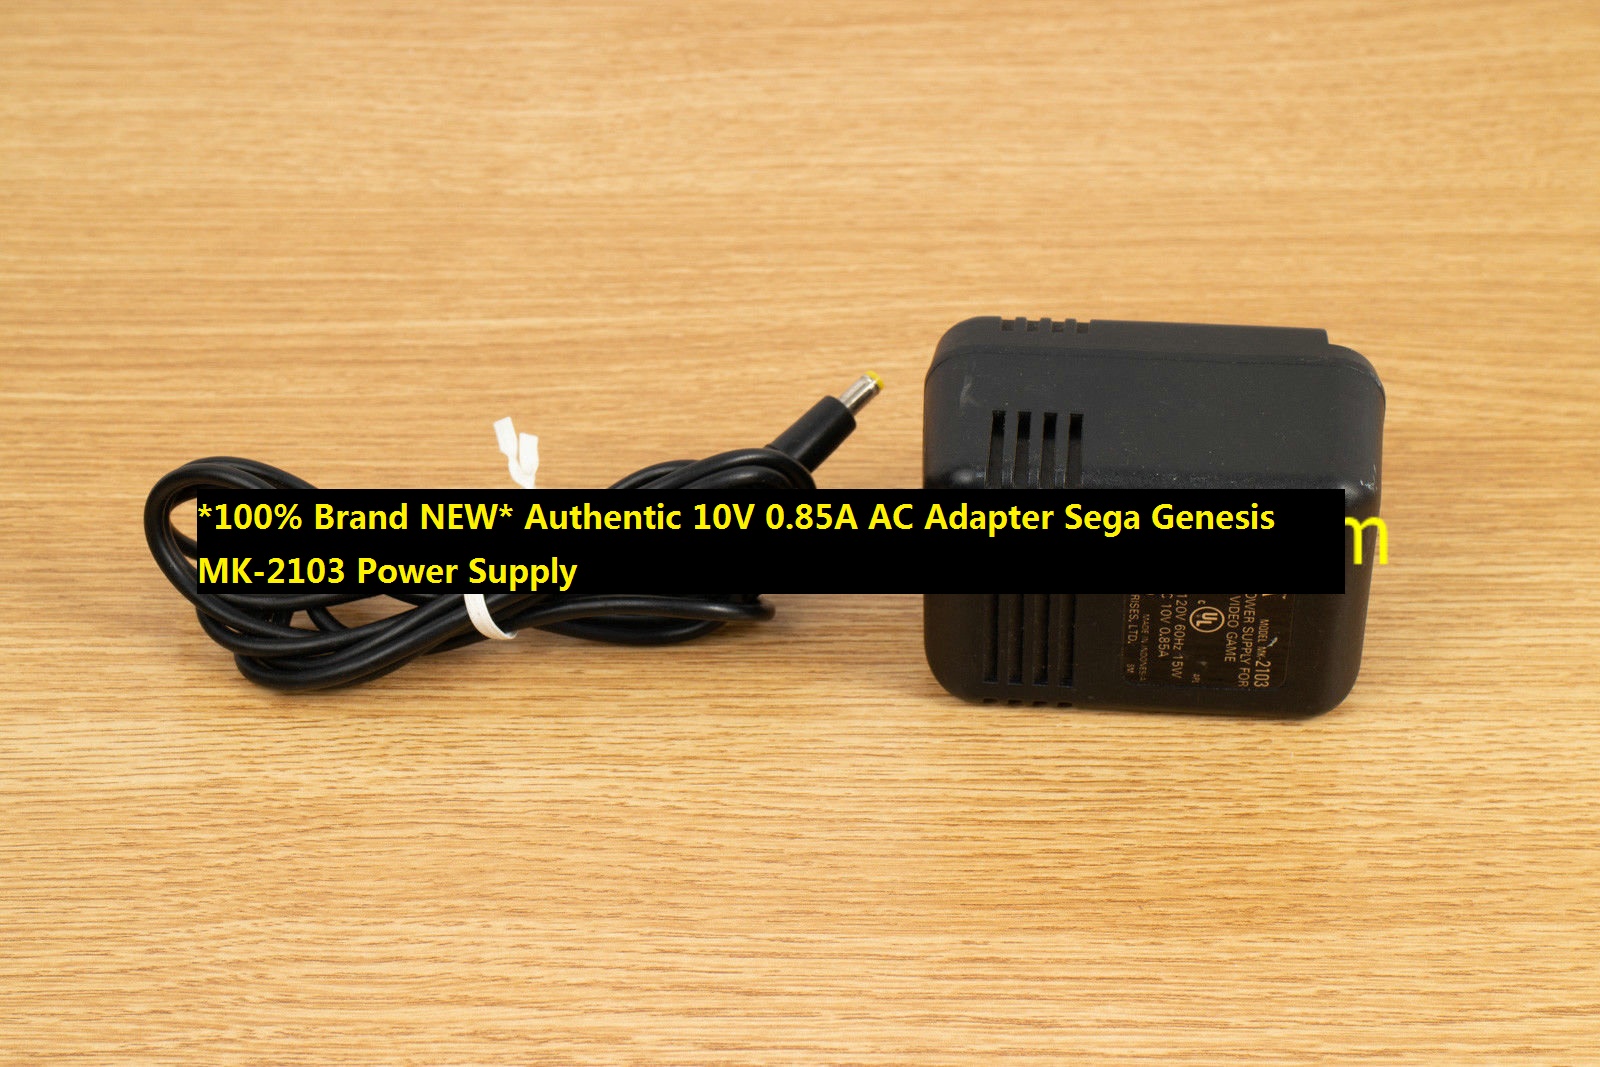 *100% Brand NEW* Authentic 10V 0.85A AC Adapter Sega Genesis MK-2103 Power Supply